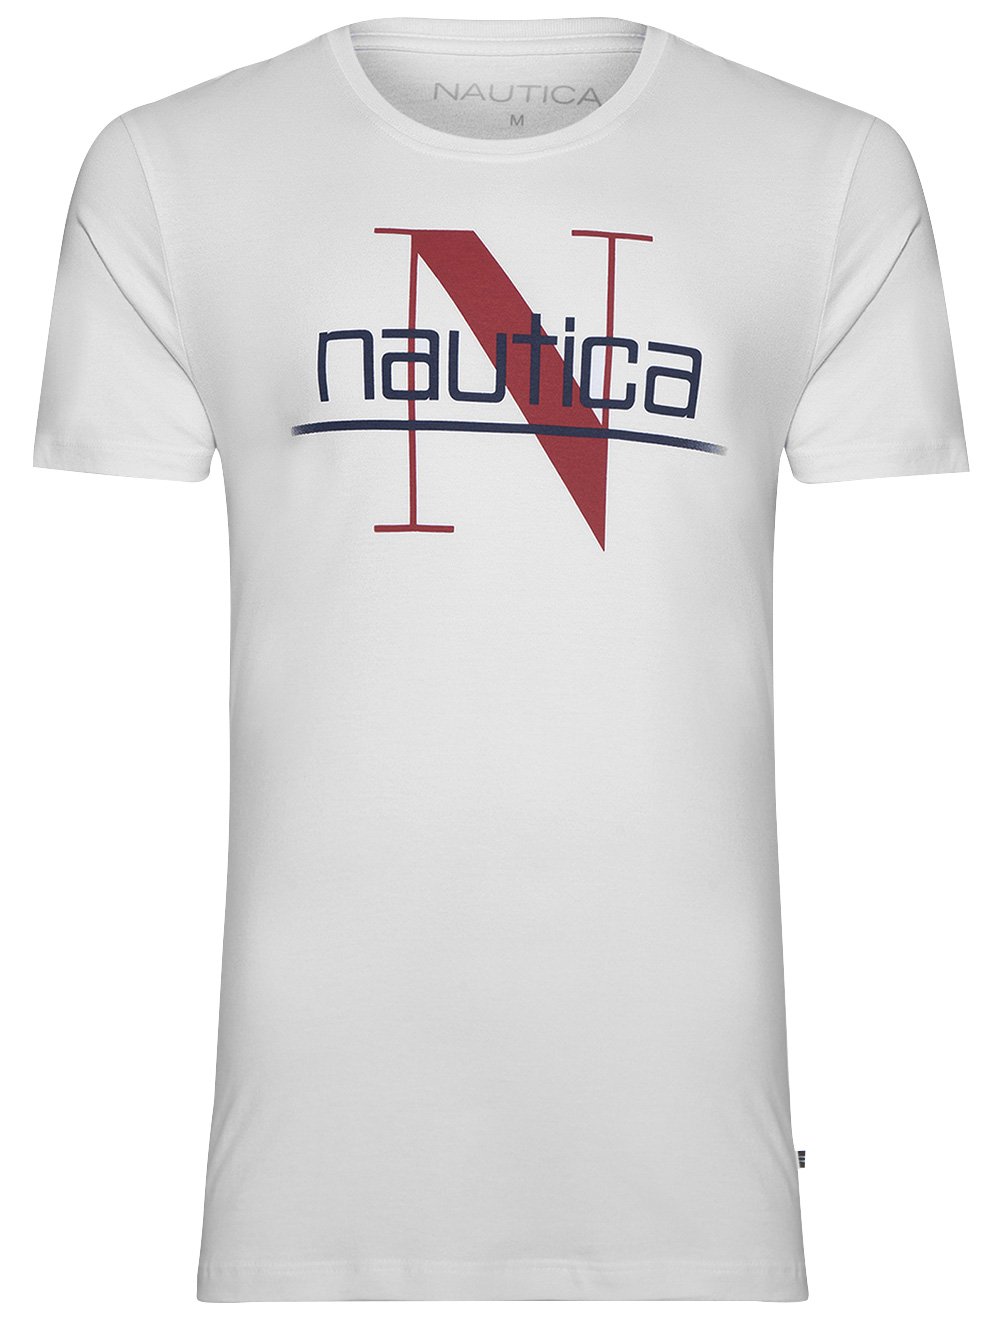 Camiseta Nautica Masculina N Logo Underline Branca